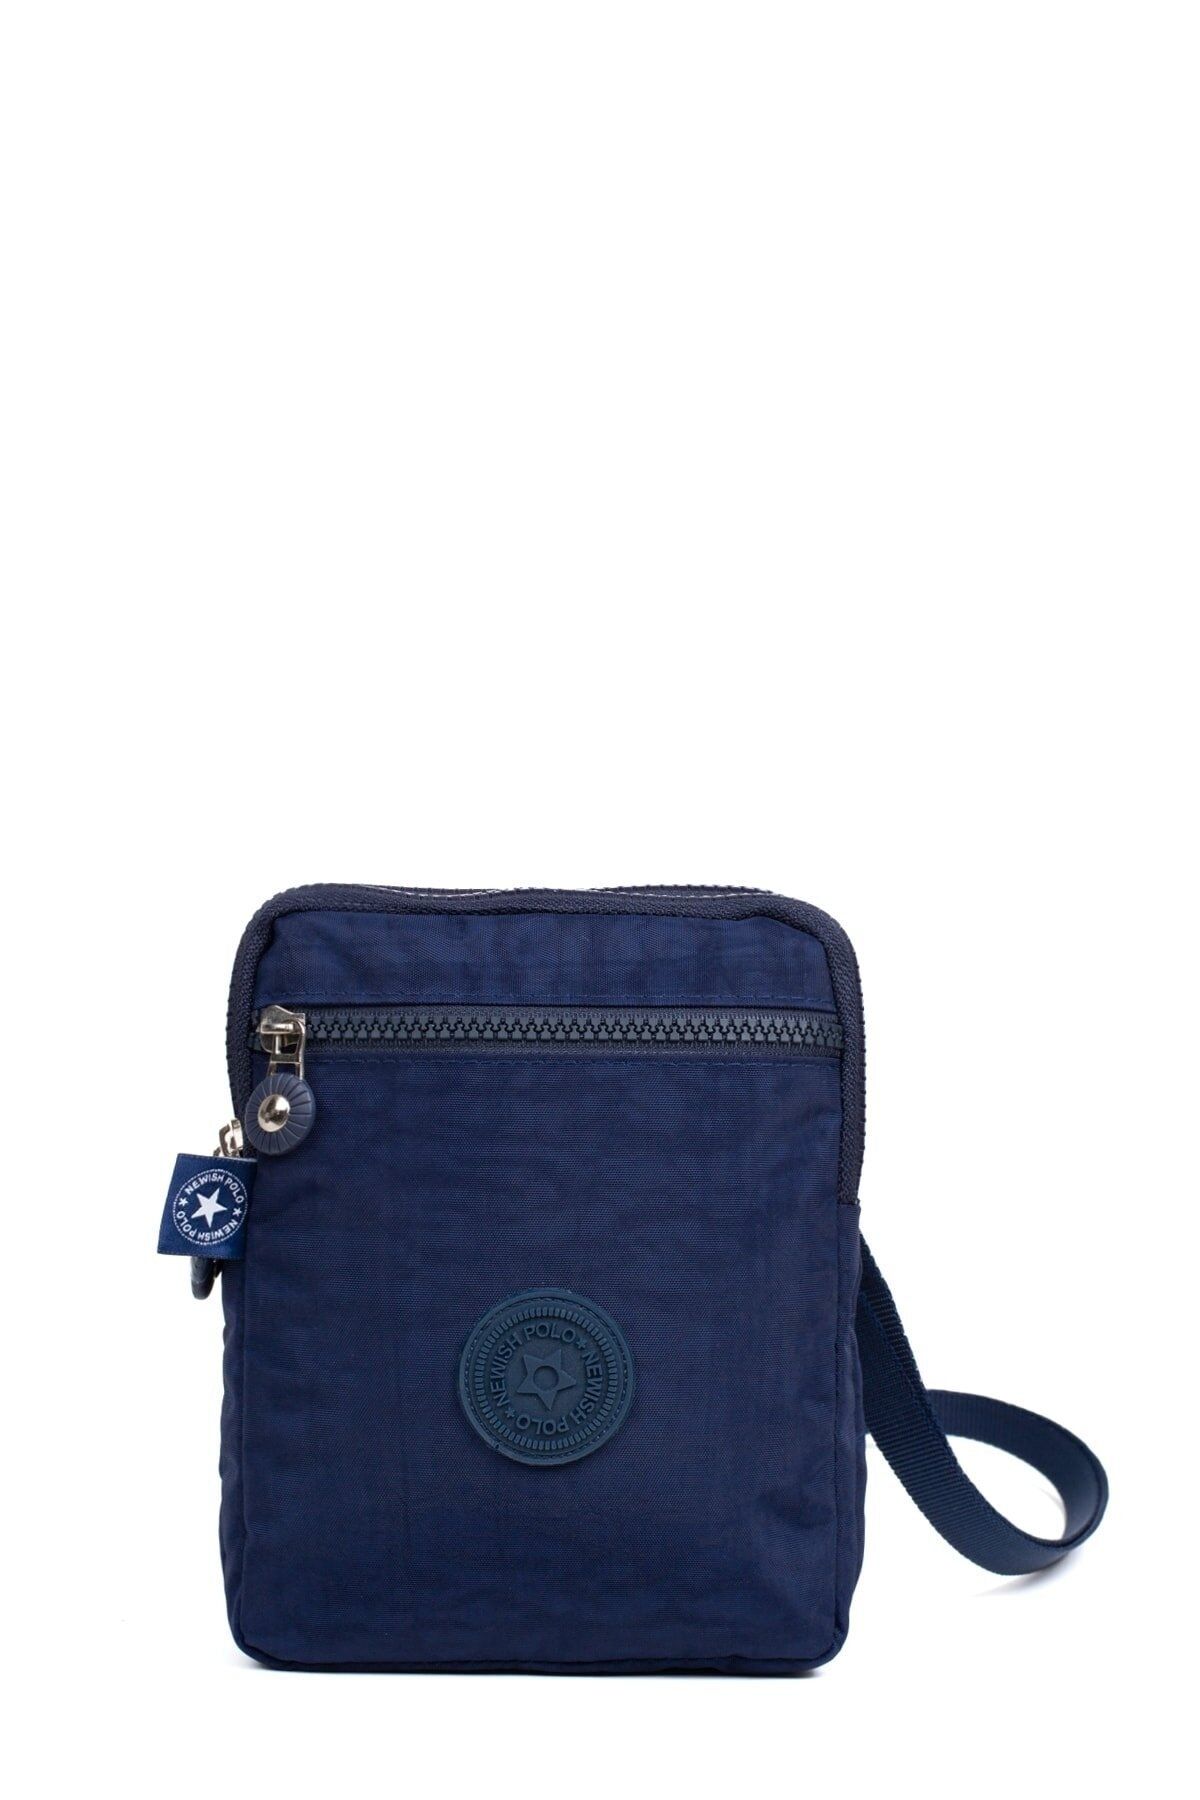 Bolso Weekend Bag Azul  Accessories Accessories